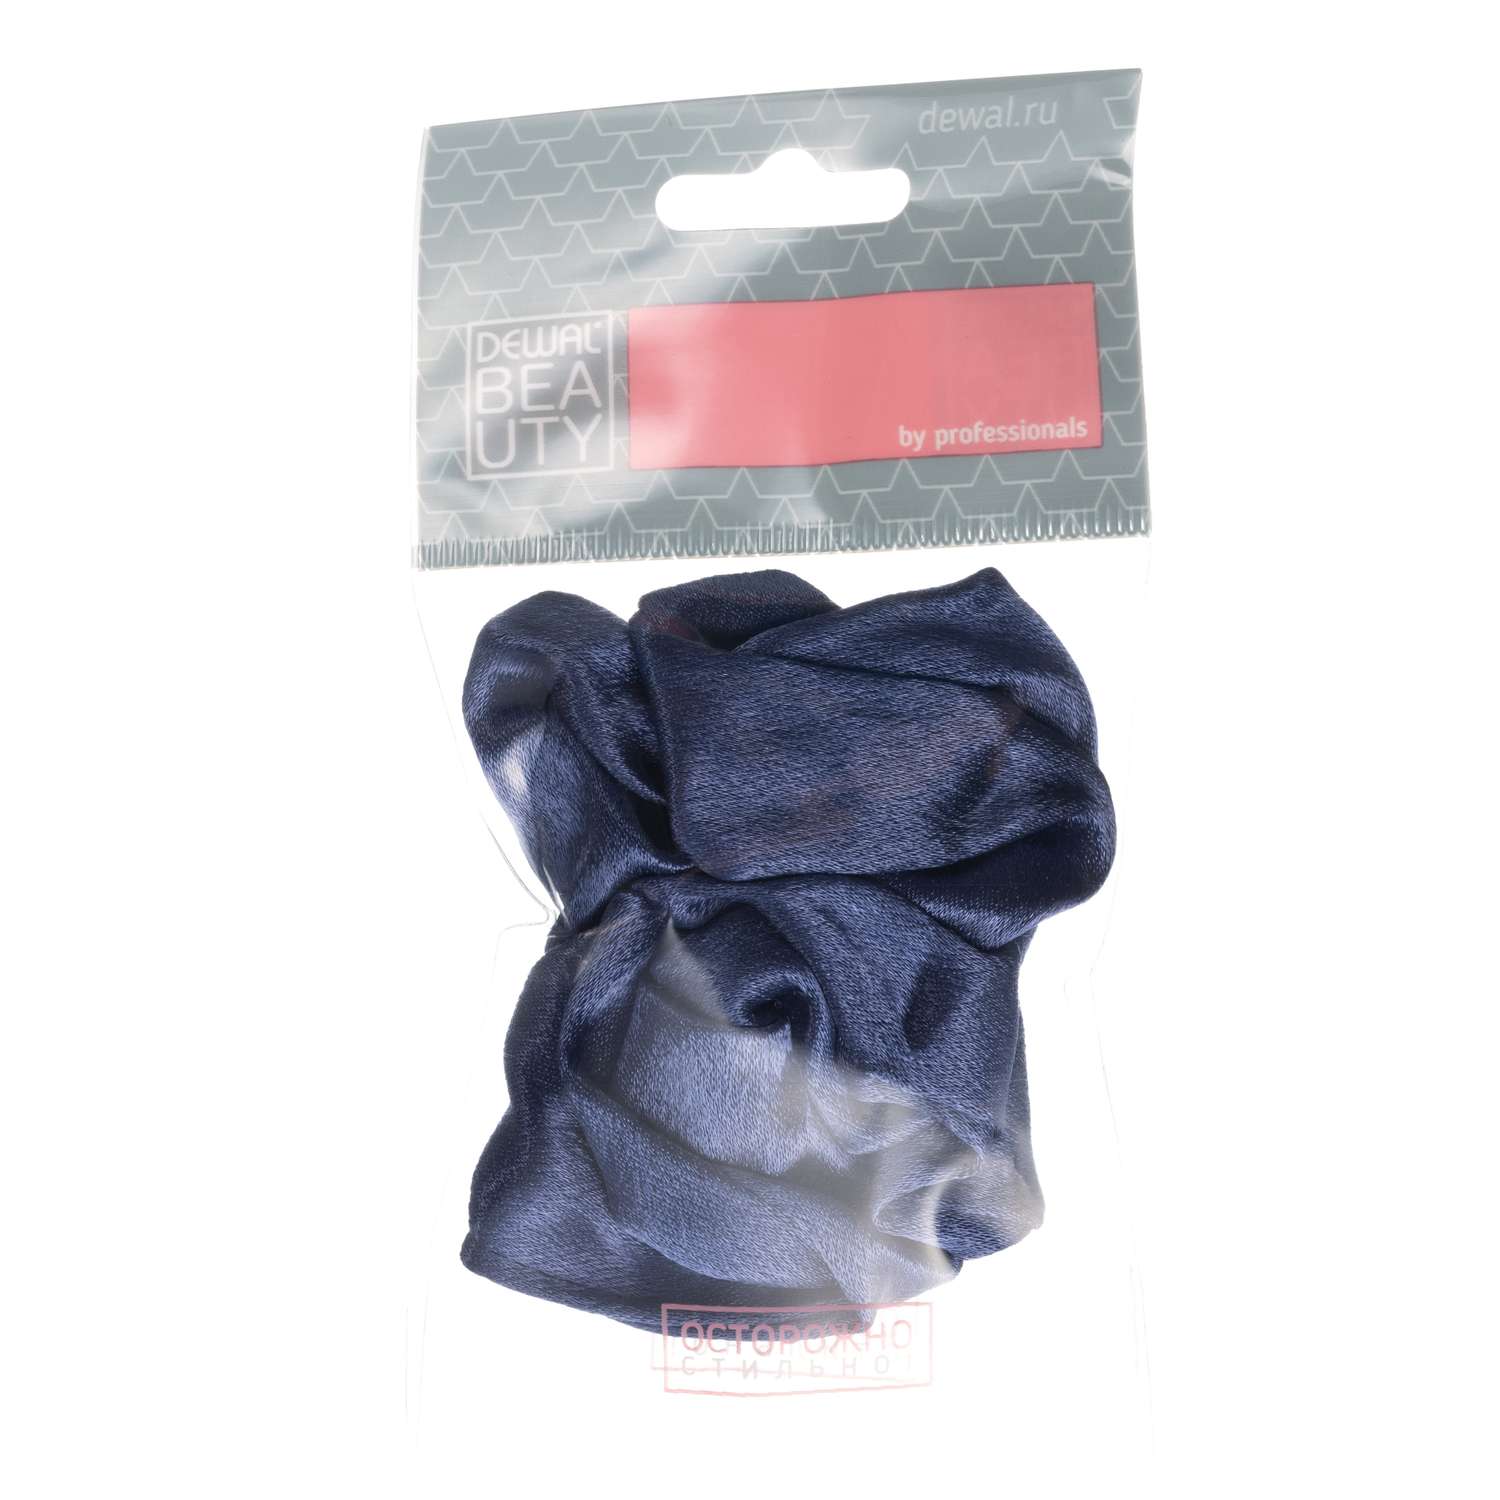 Резинка для волос Dewal Beauty из ткани синяя - фото 2